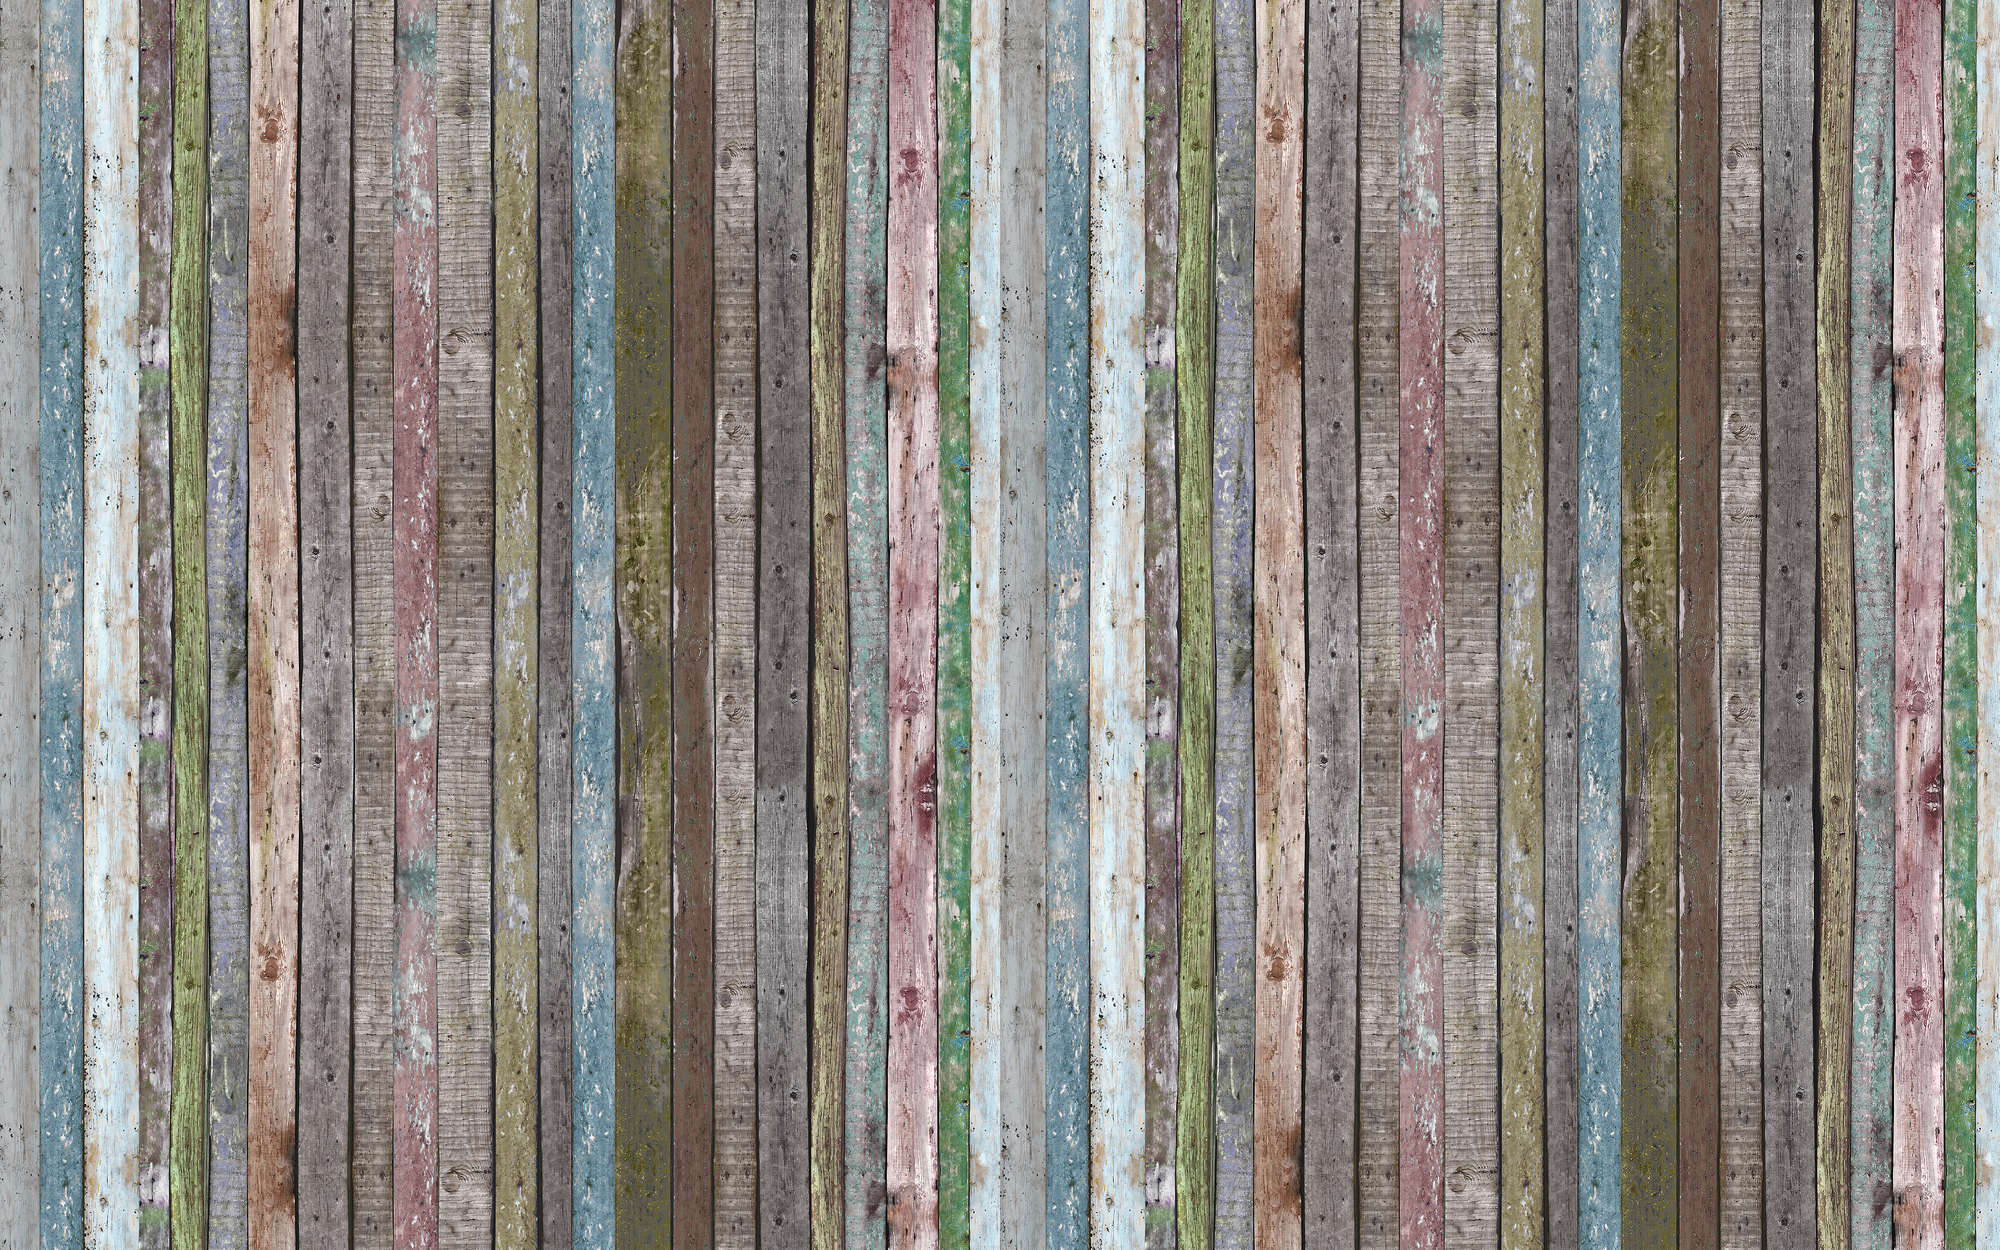             Fototapete Streifenbalken aus Holz – Mattes Glattvlies
        